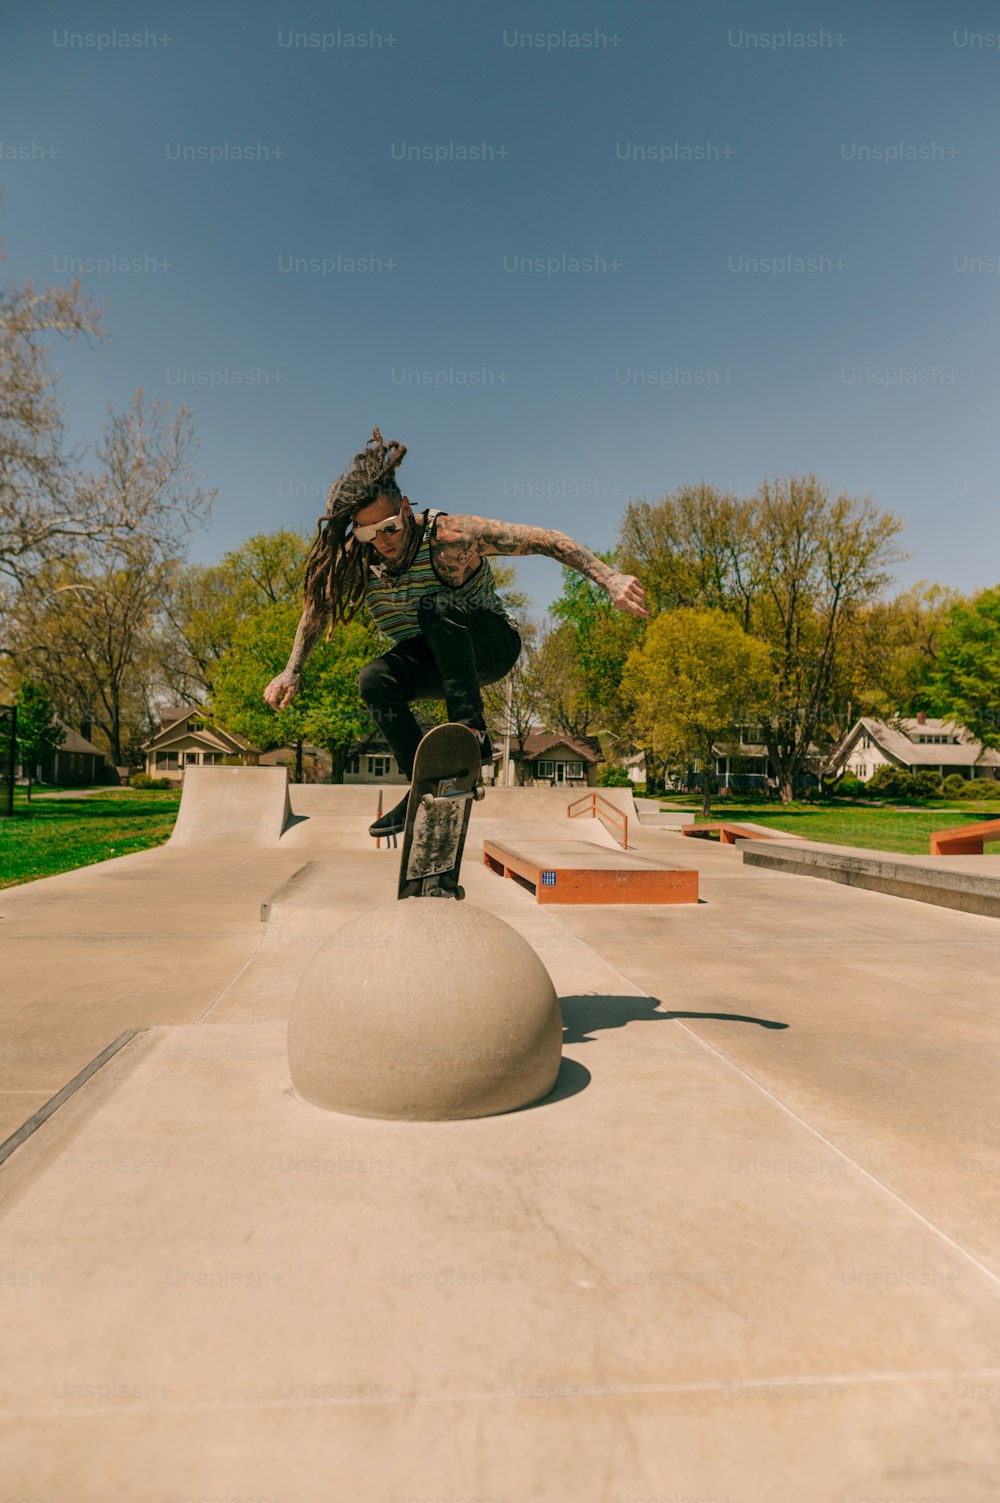 a man riding a skateboard on top of a cement ball